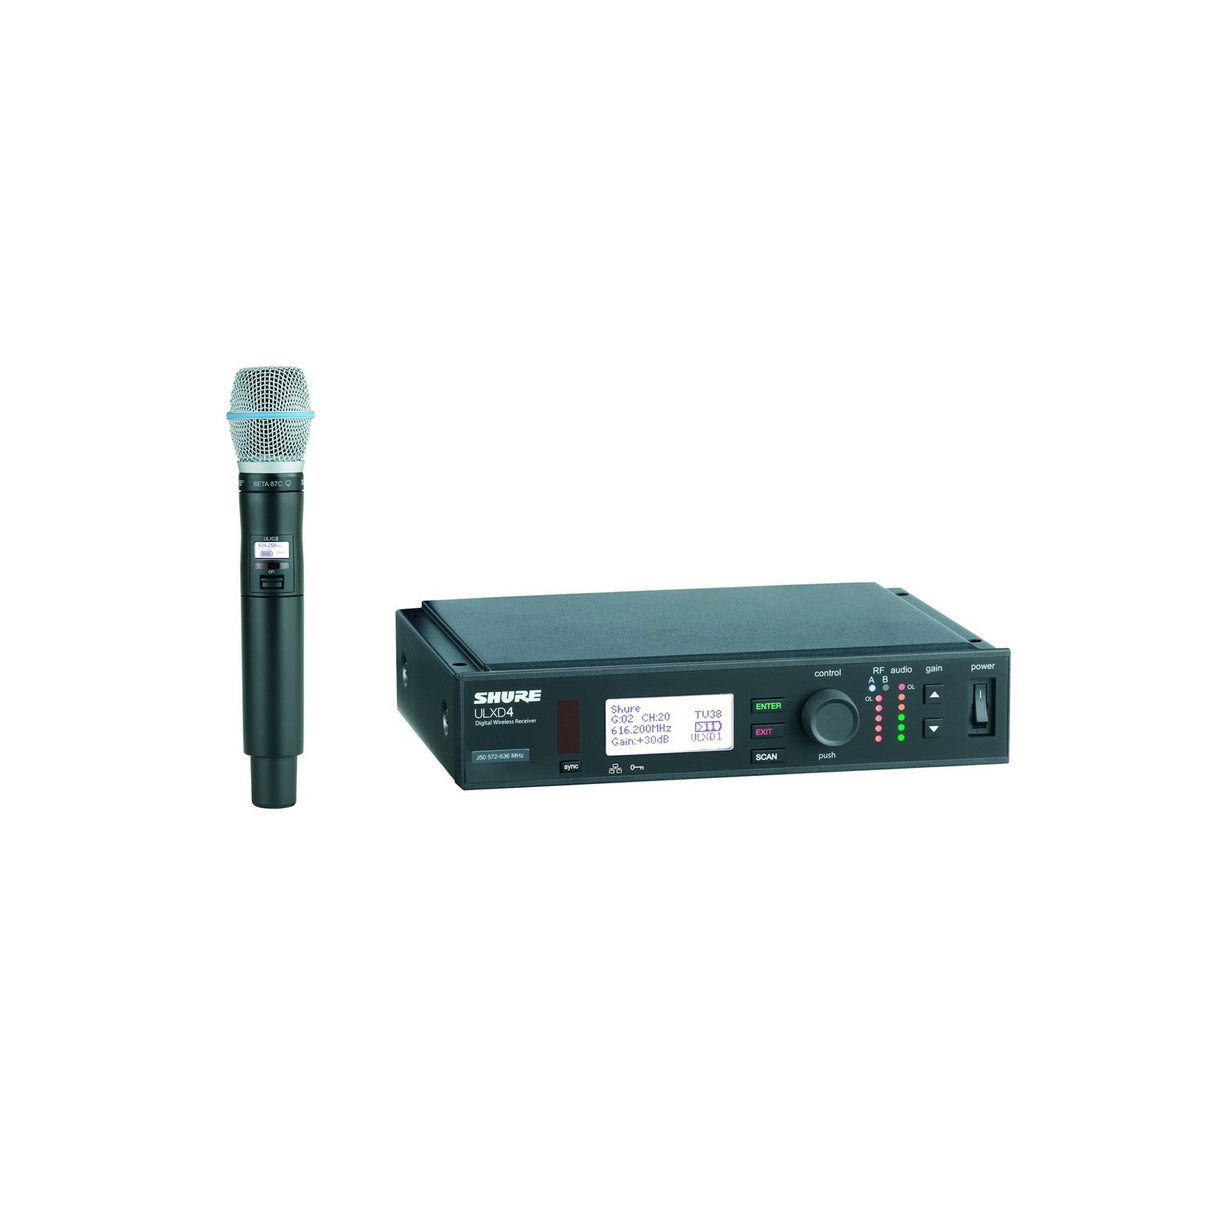 Shure ULXD24/B87C Handheld Wireless Microphone System, H50 534-598 MHz